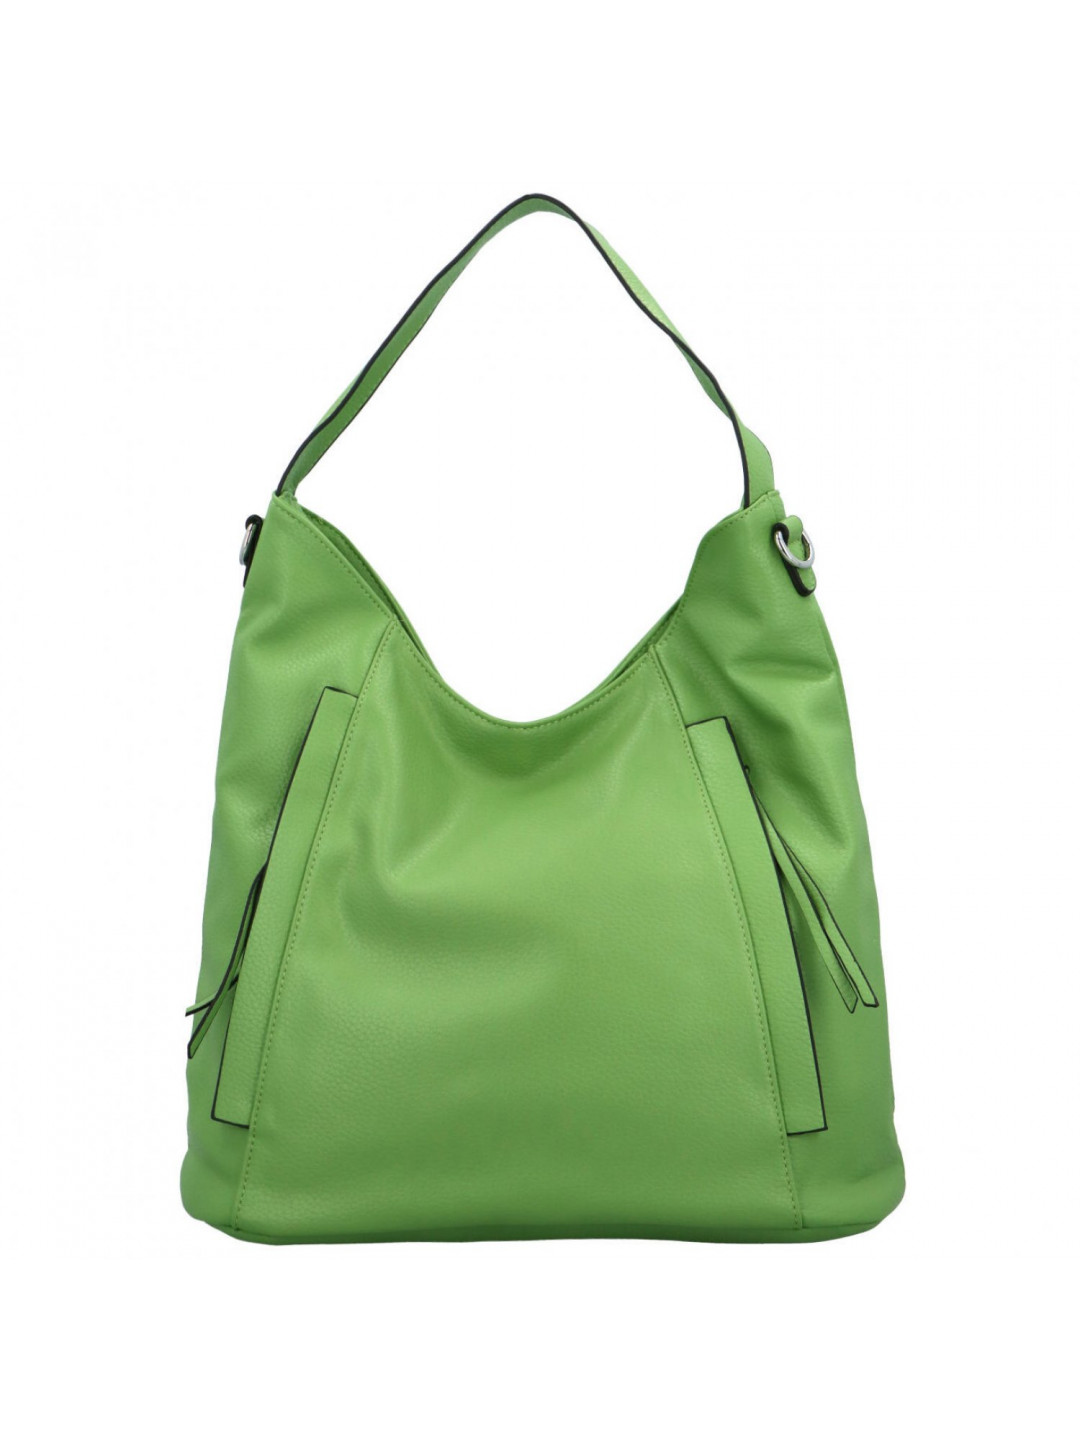 Trendy dámská kabelka Inés zelená